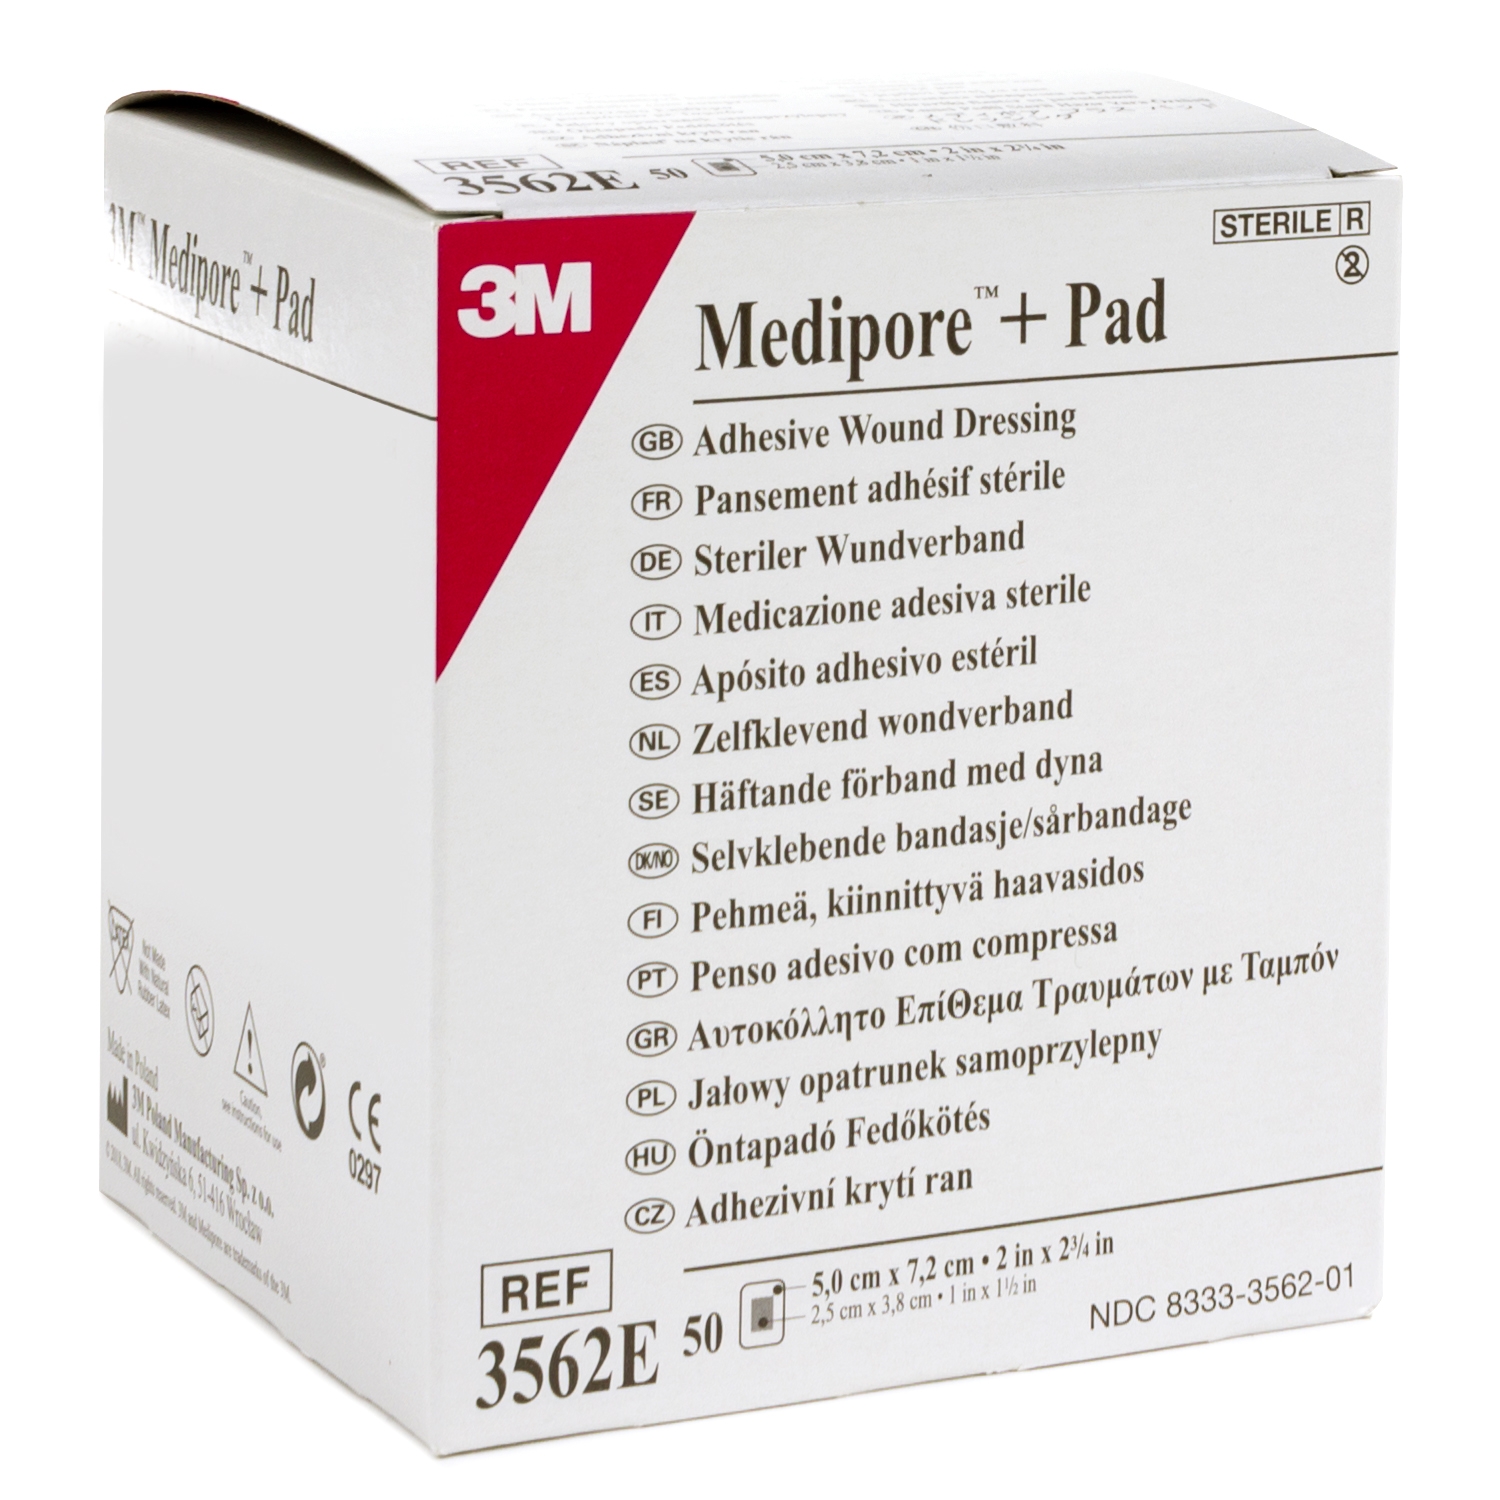 Medipore + pad - 5 x 7 cm (50 st)